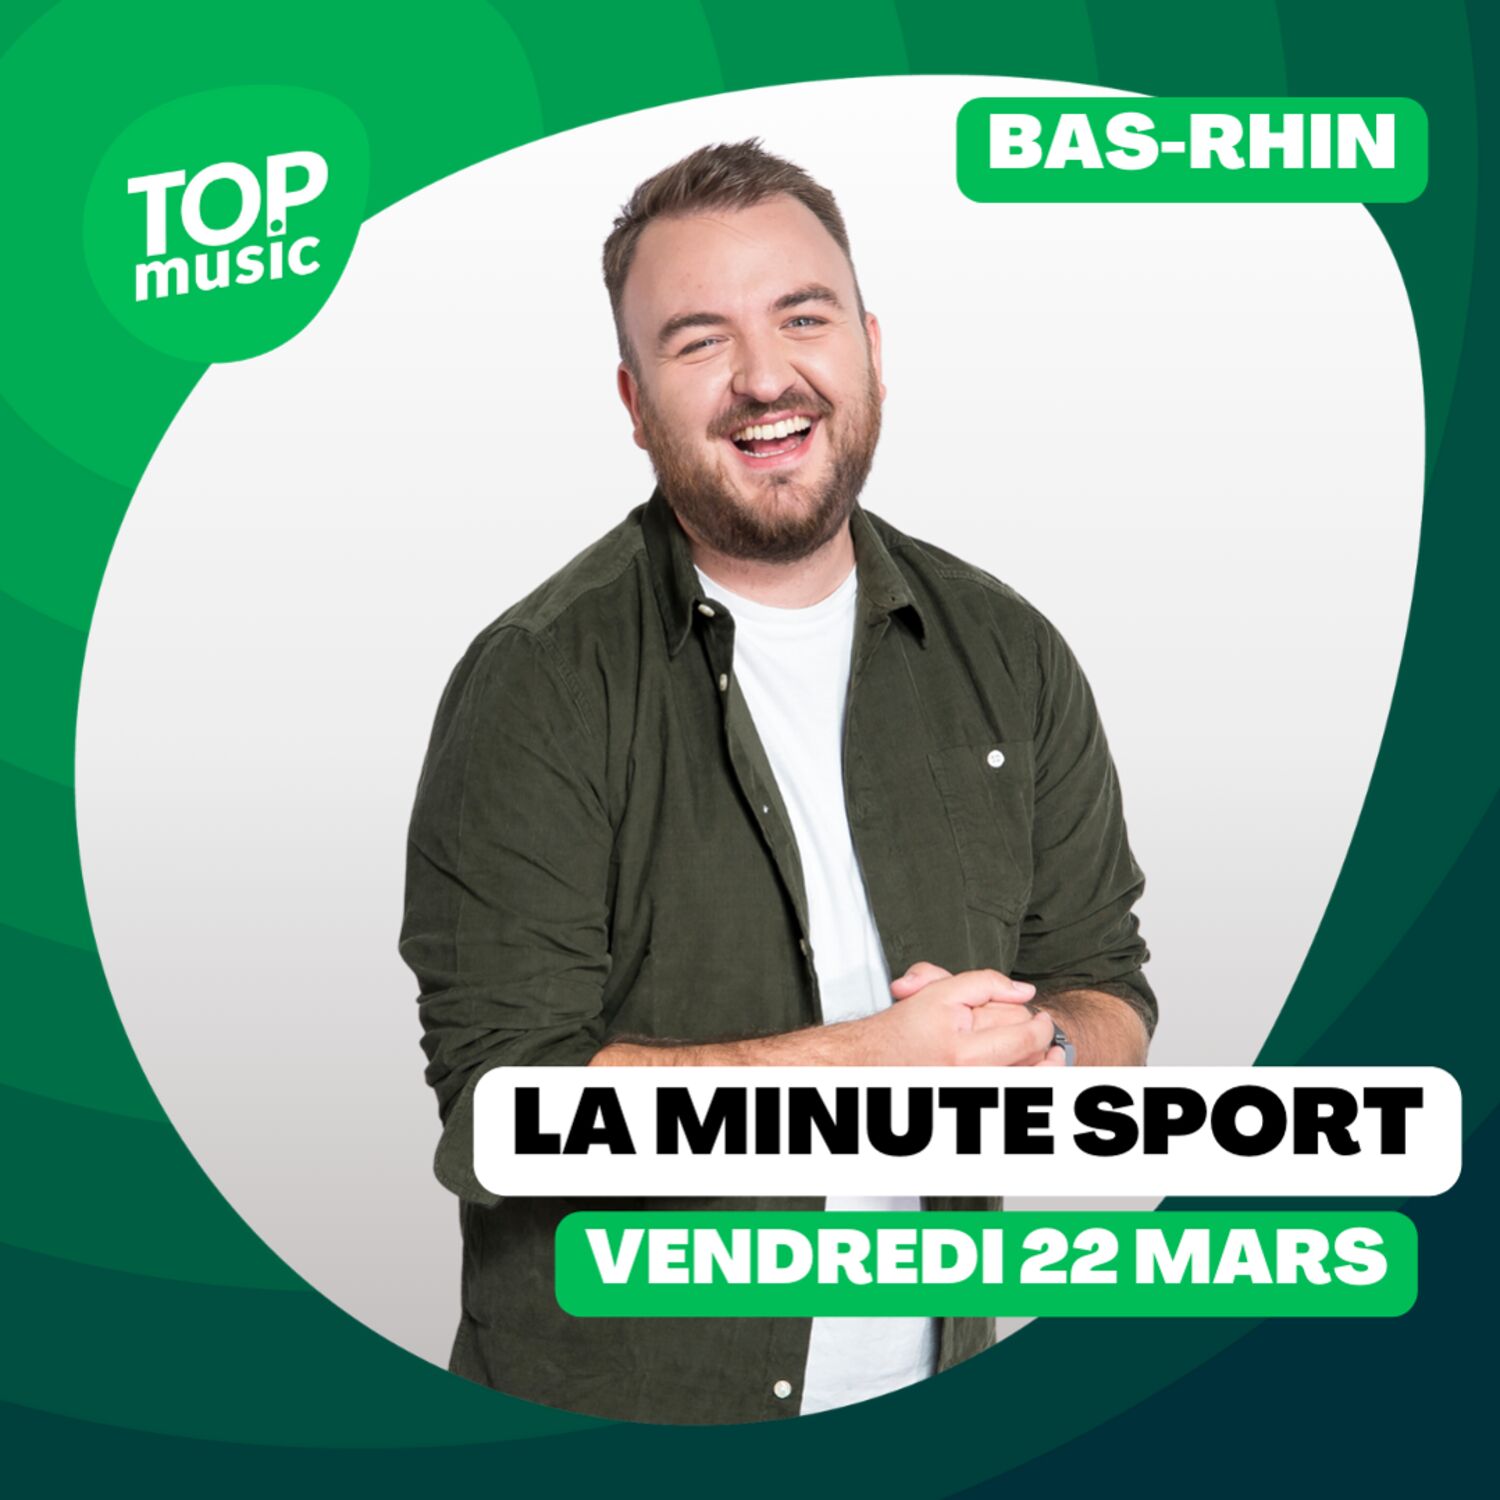 La Minute sport du Bas-Rhin - vendredi 22 mars